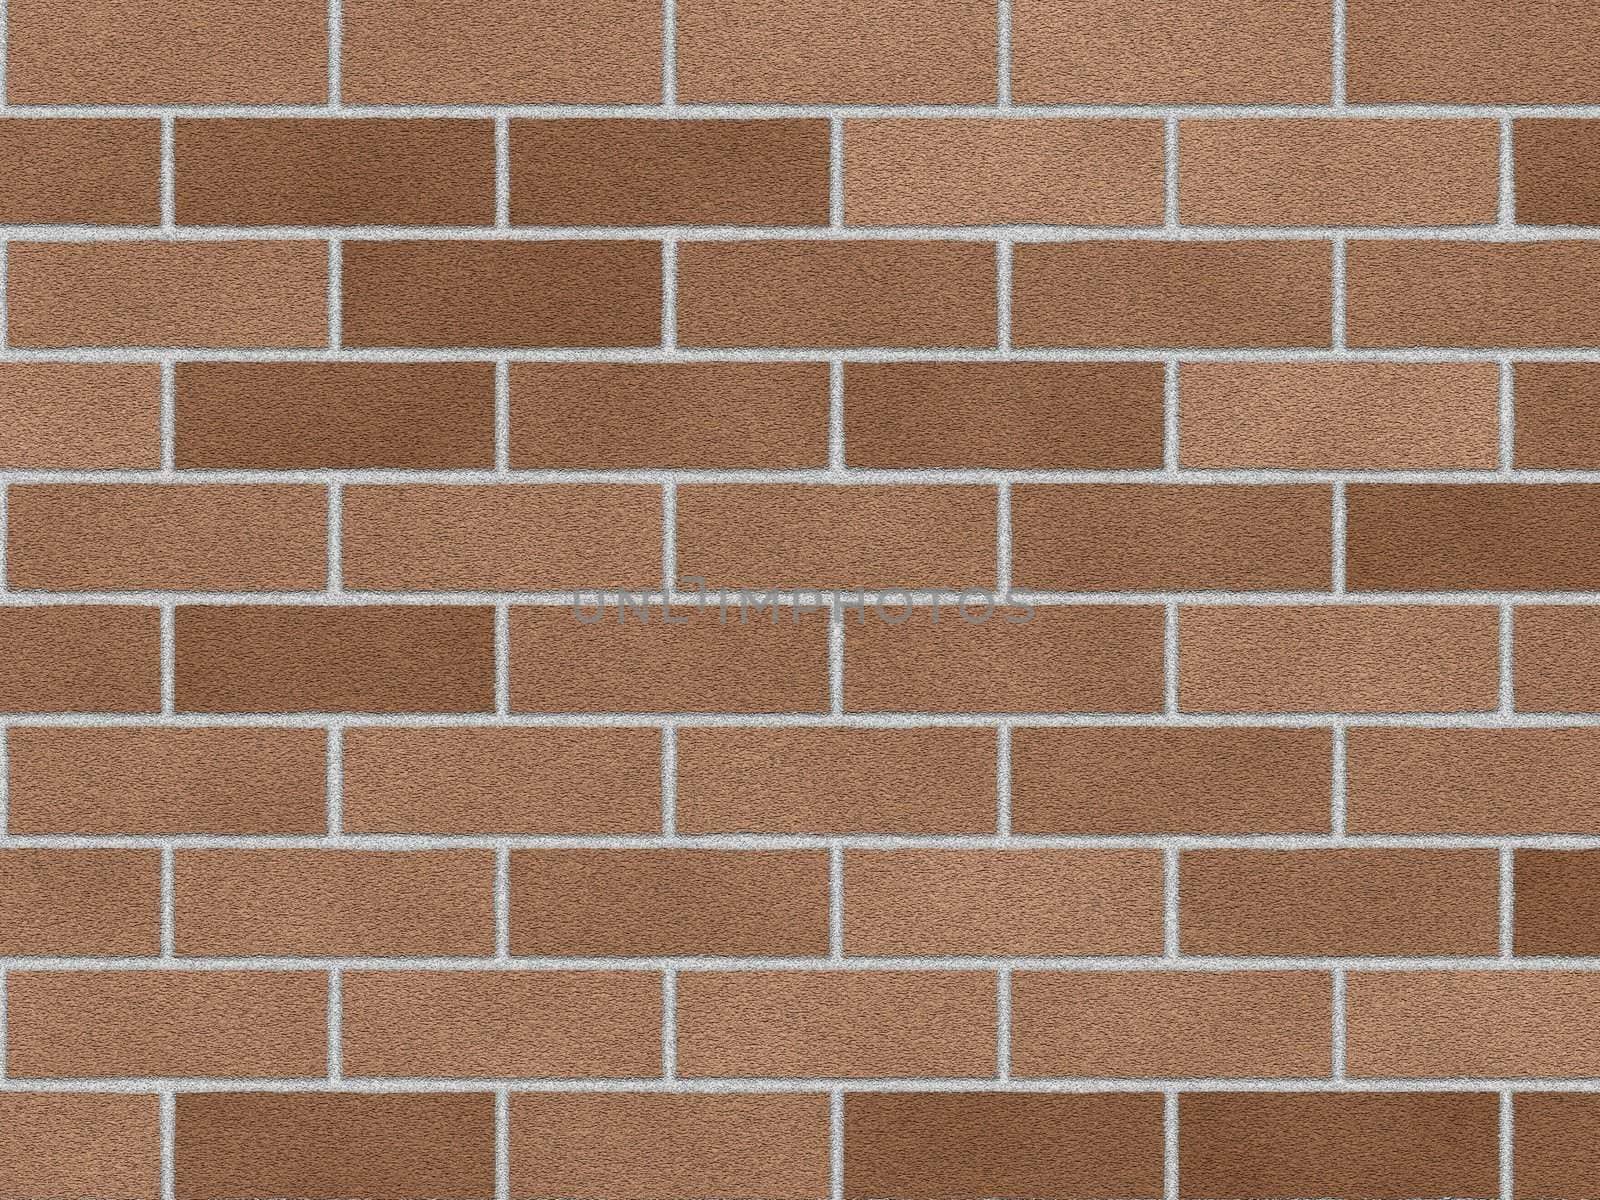  Texture stone brick wall by peromarketing